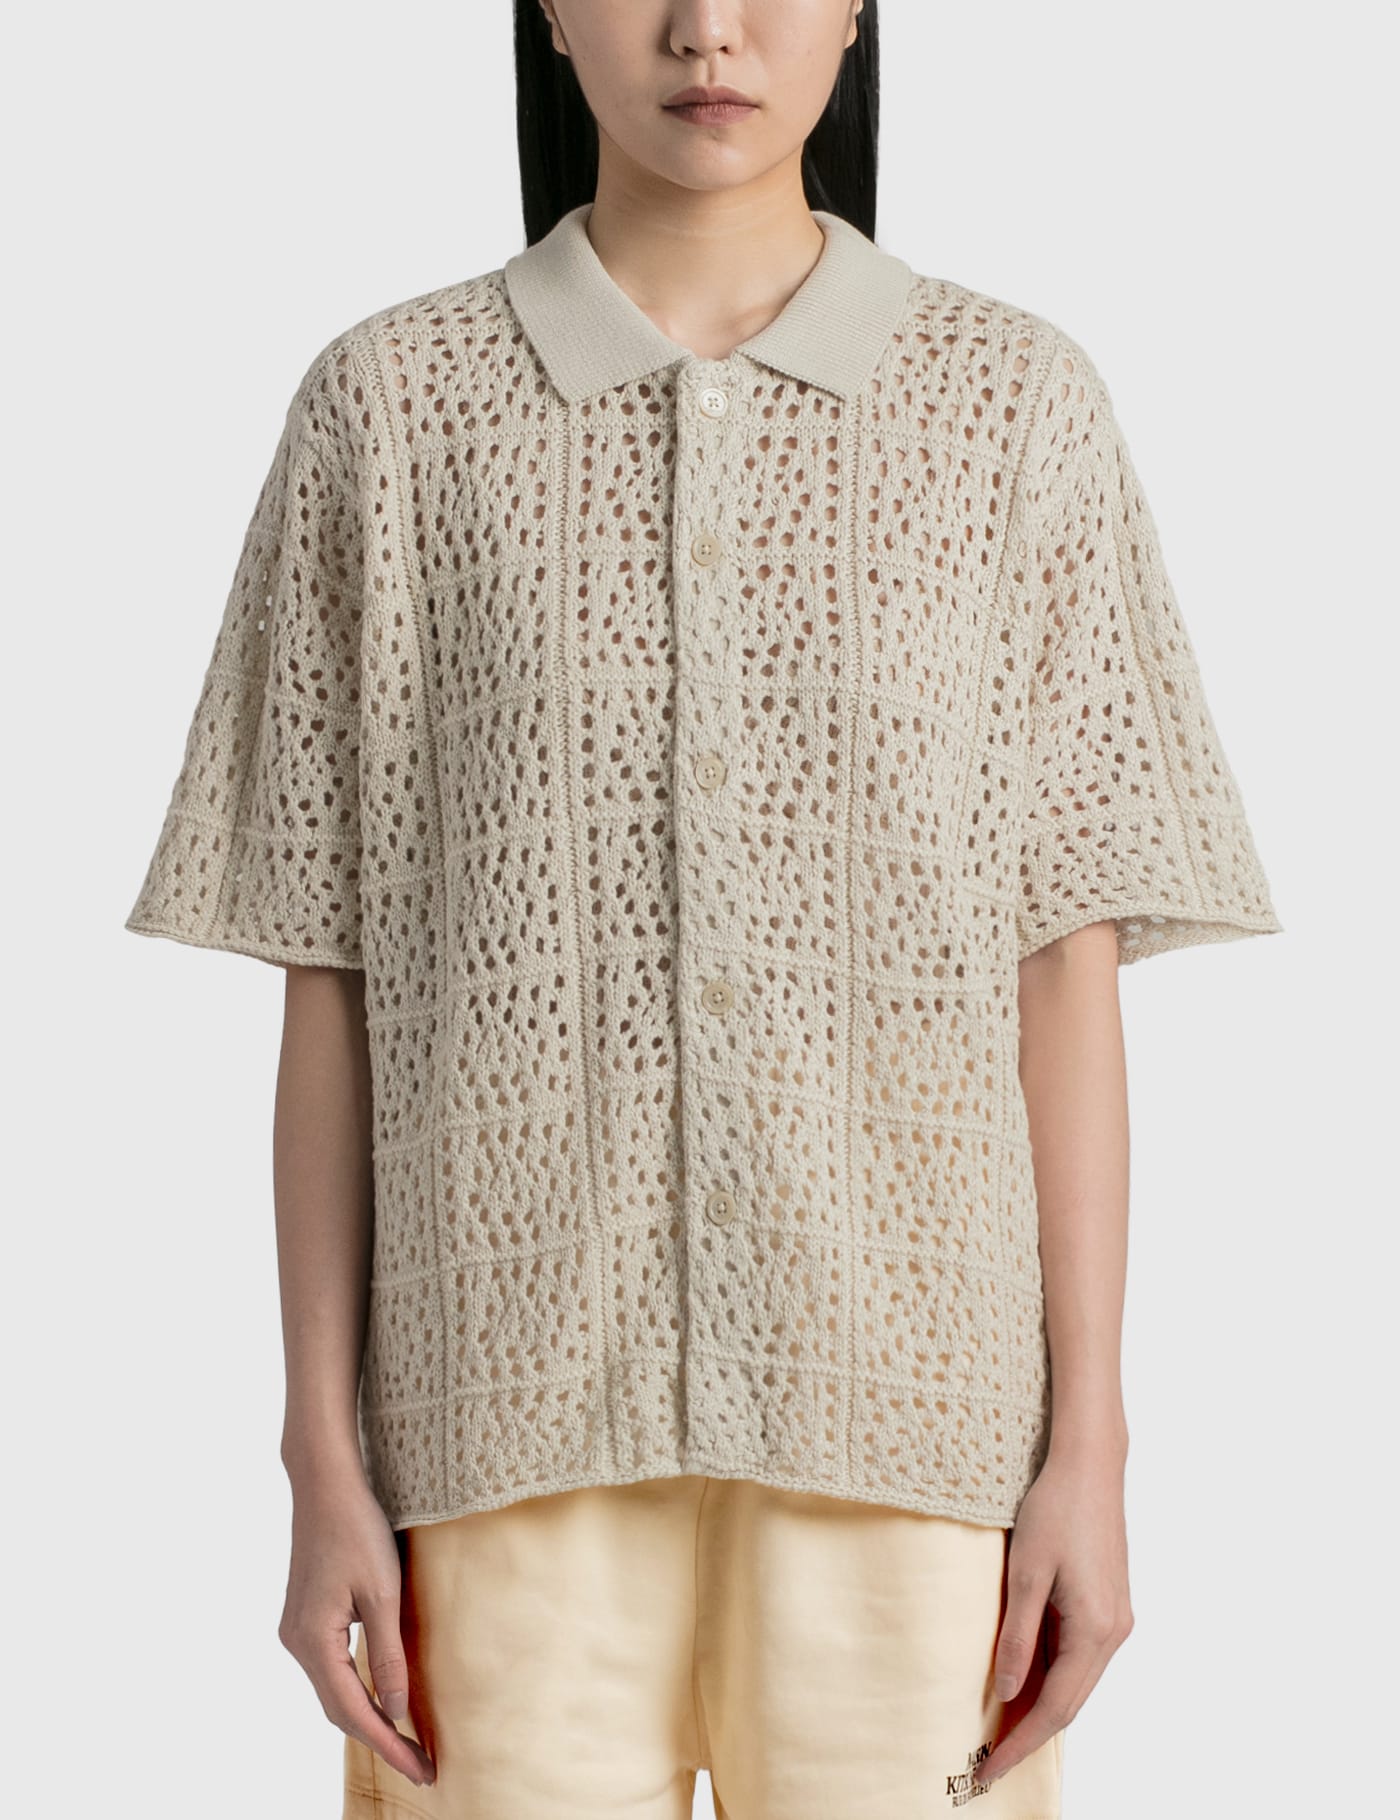 Stüssy - Crochet Shirt | HBX - HYPEBEAST 为您搜罗全球潮流时尚品牌